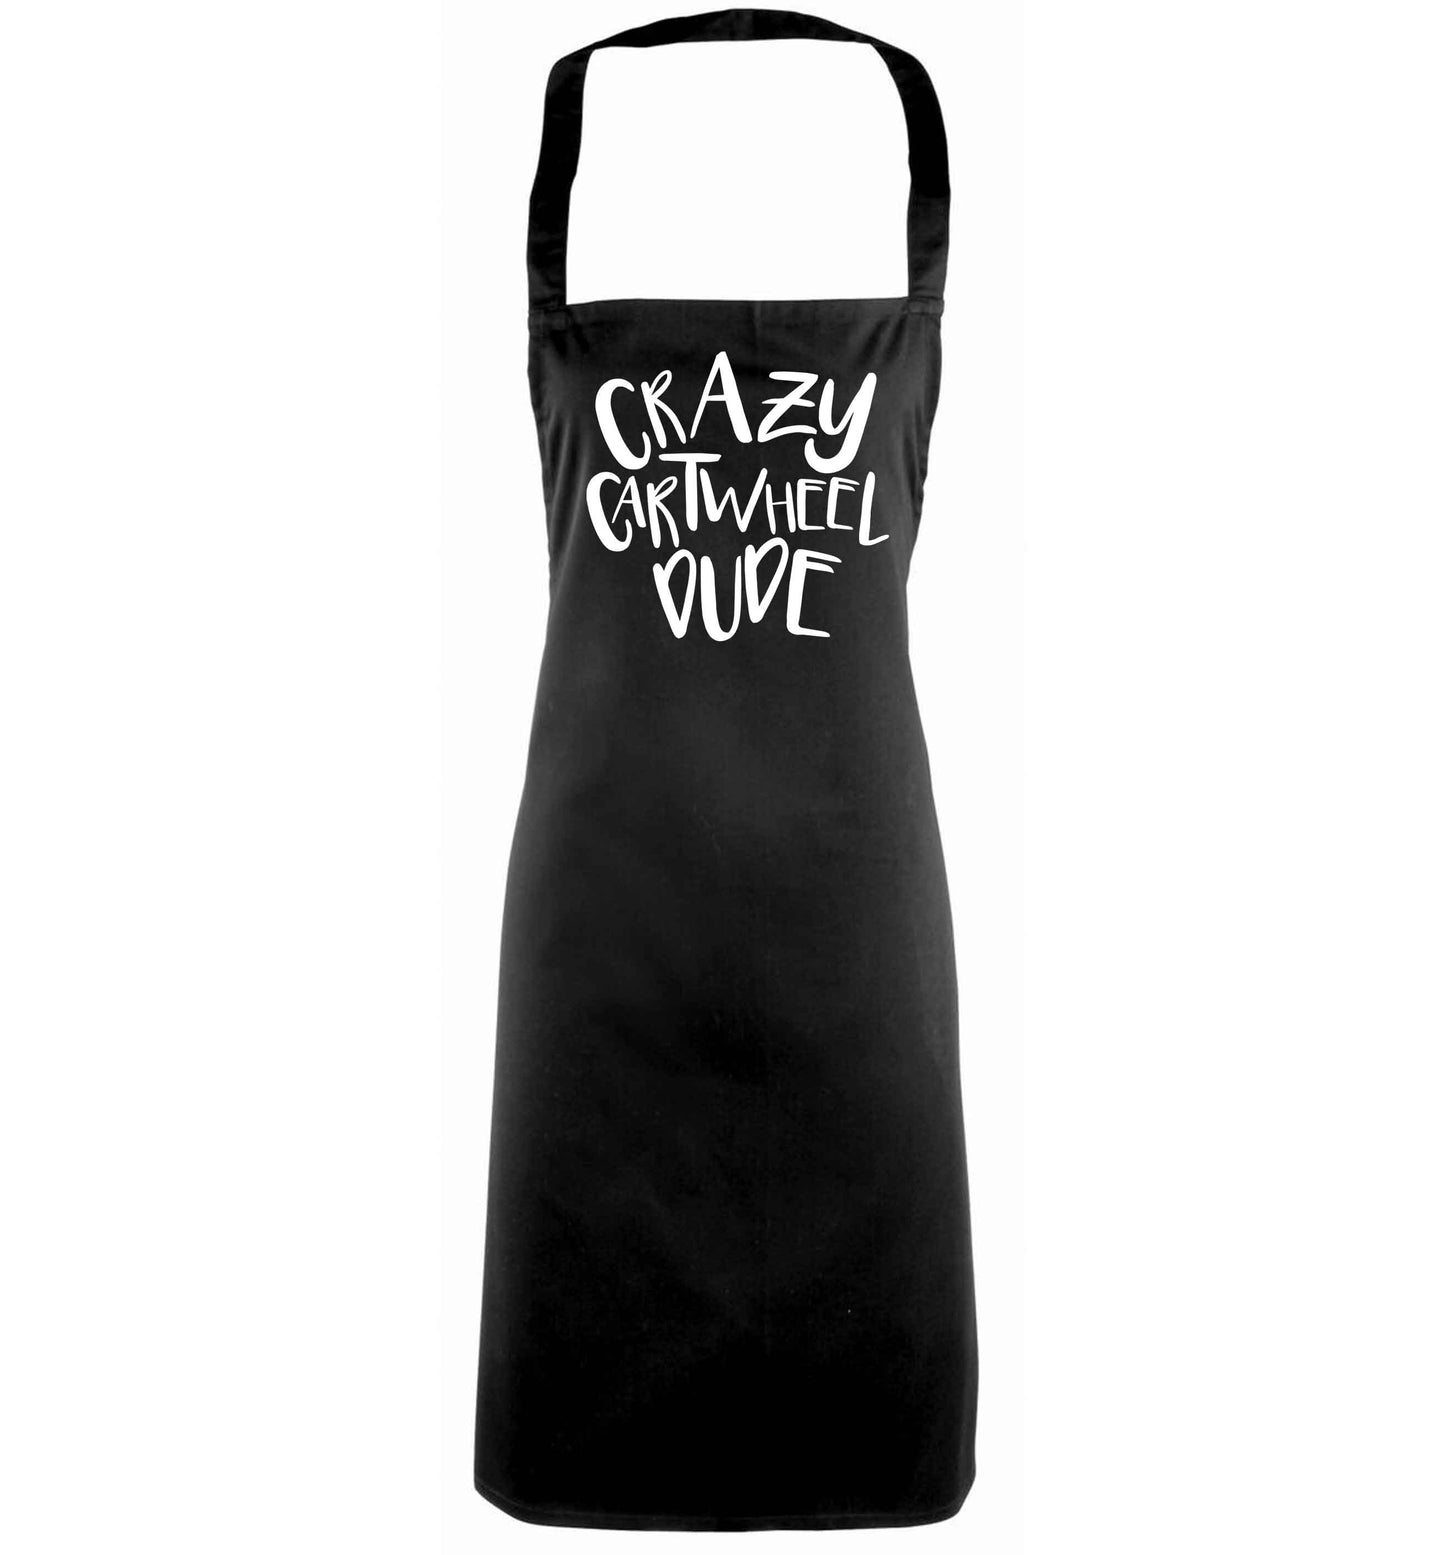 Crazy cartwheel dude black apron